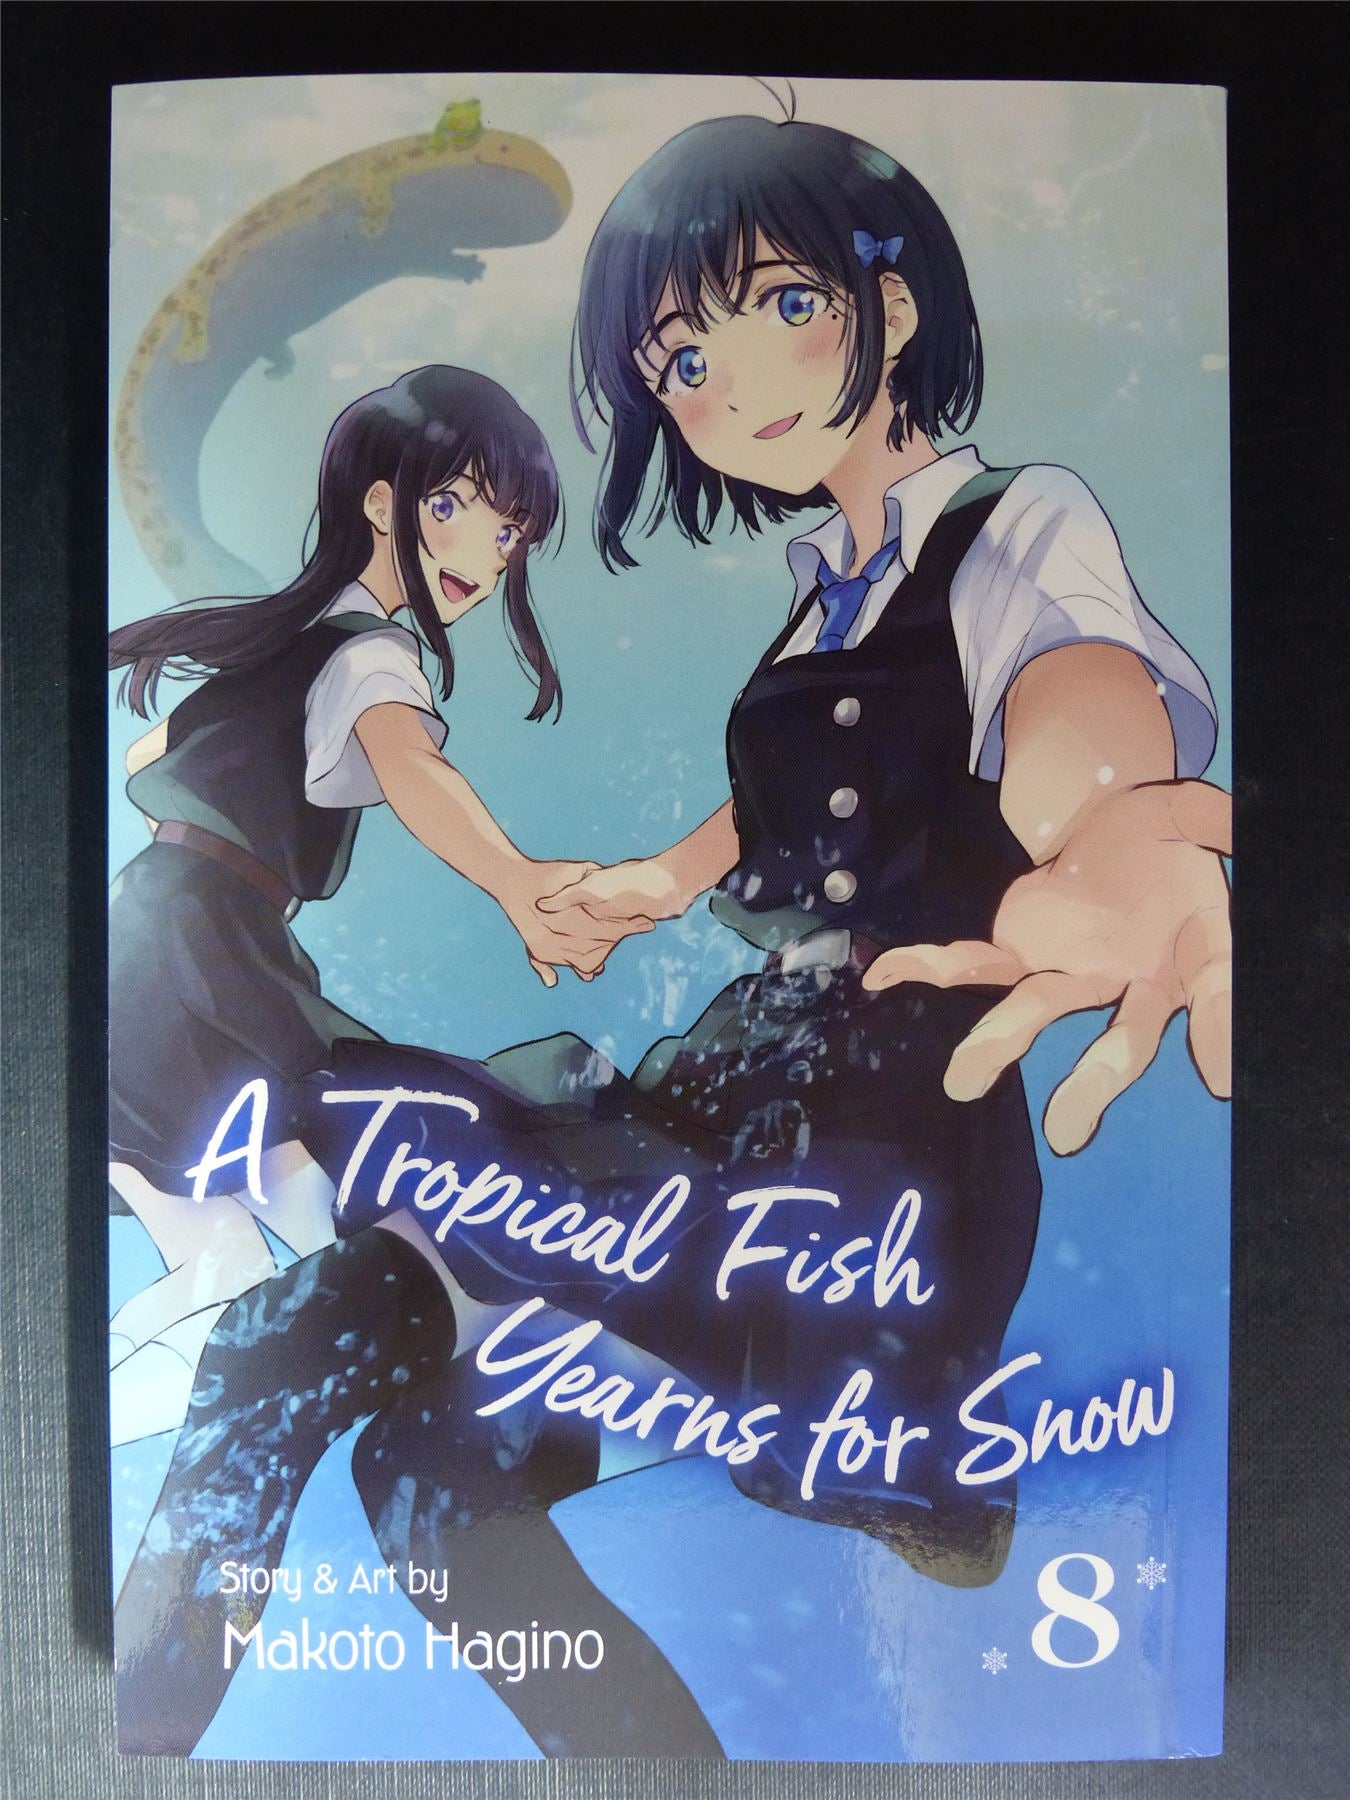 A TROPICAL Fish Years for Snow Volume 8 - Viz Manga #71E